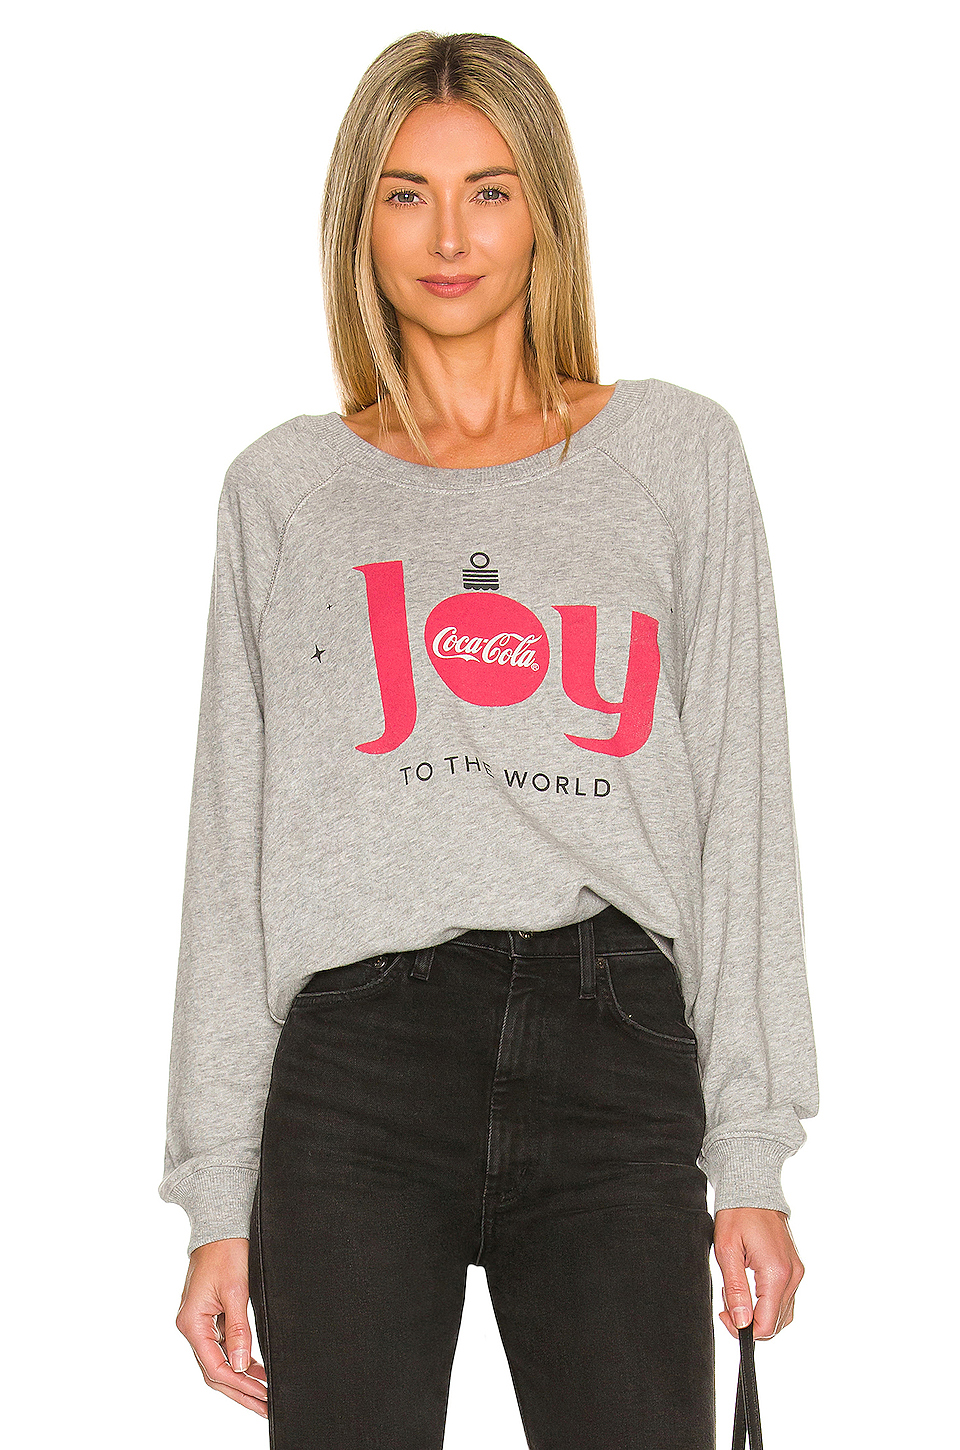 Joy to the World Sweatshirt展示图